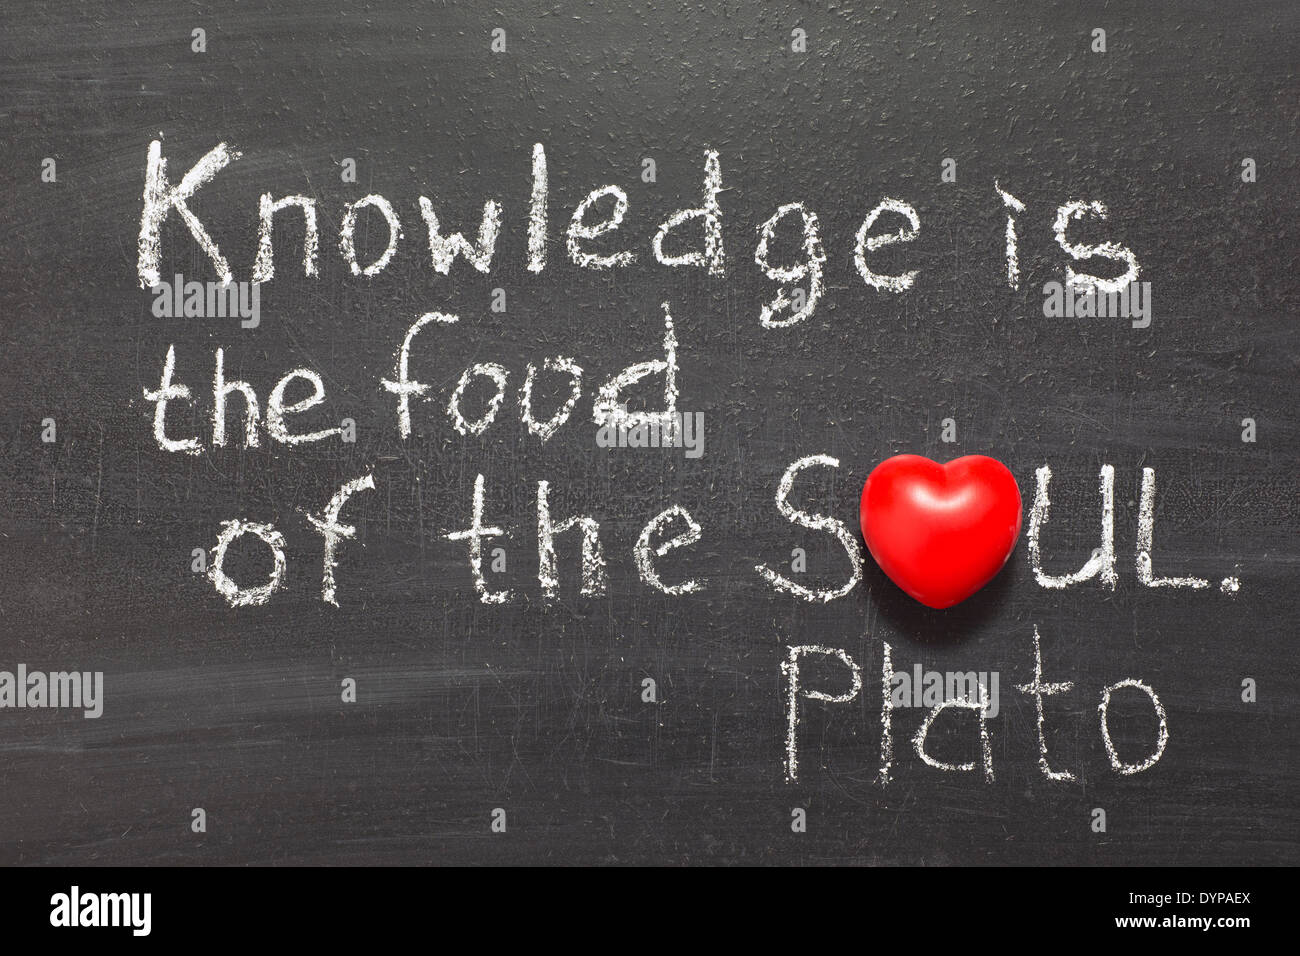 famous ancient Greek philosopher Plato quote interpretation handwritten on blackboard Stock Photo